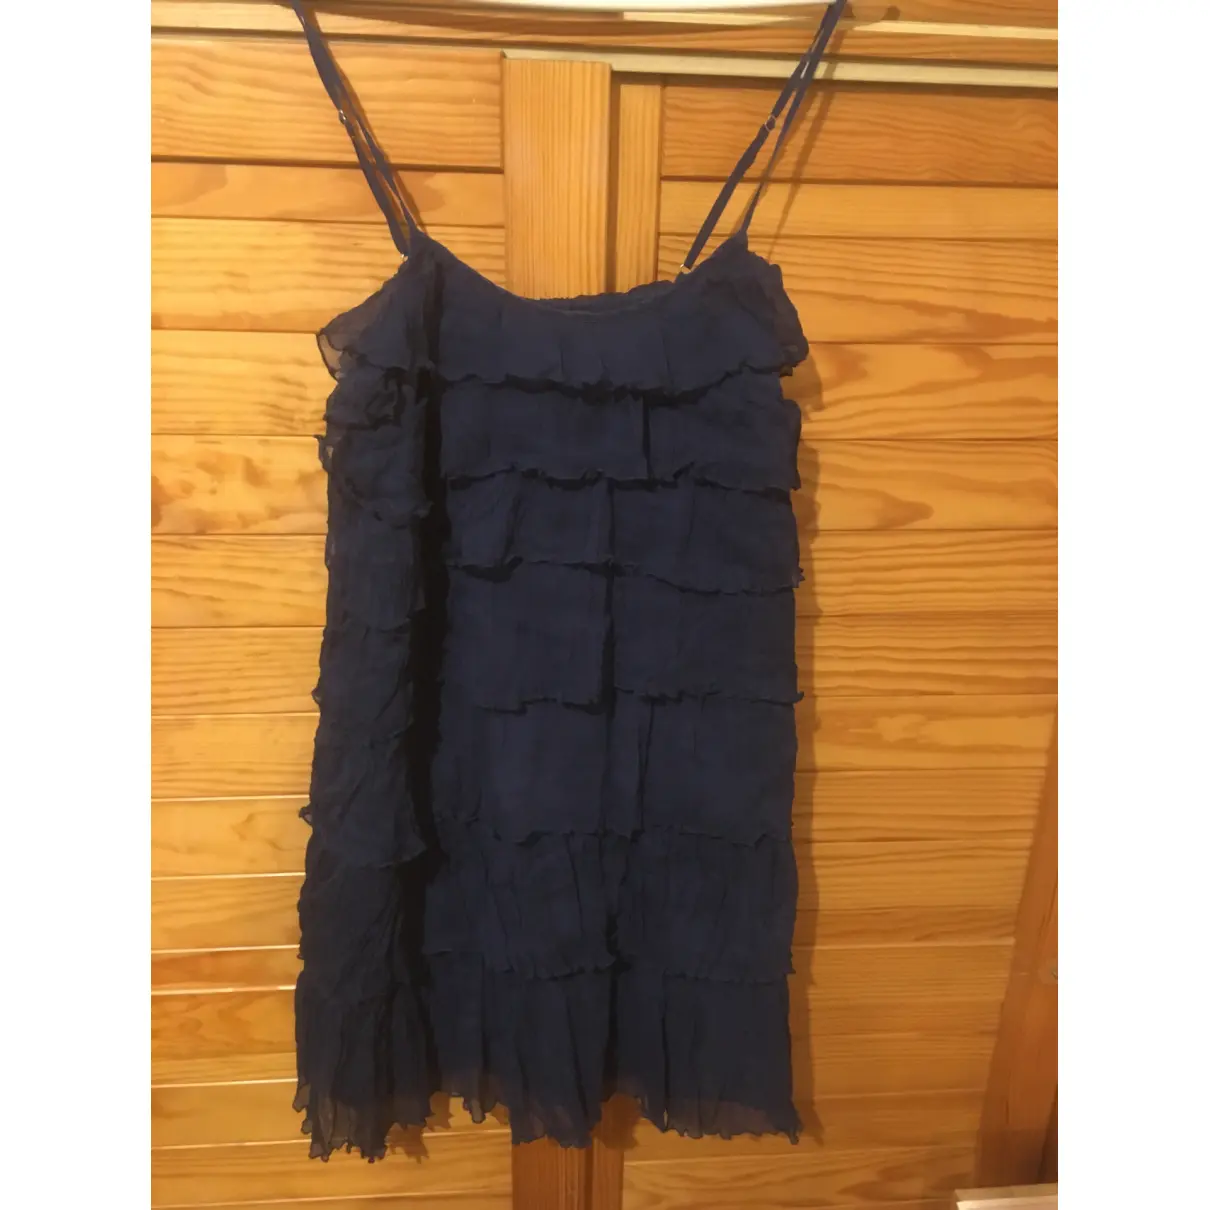 Buy Bel Air Silk mini dress online